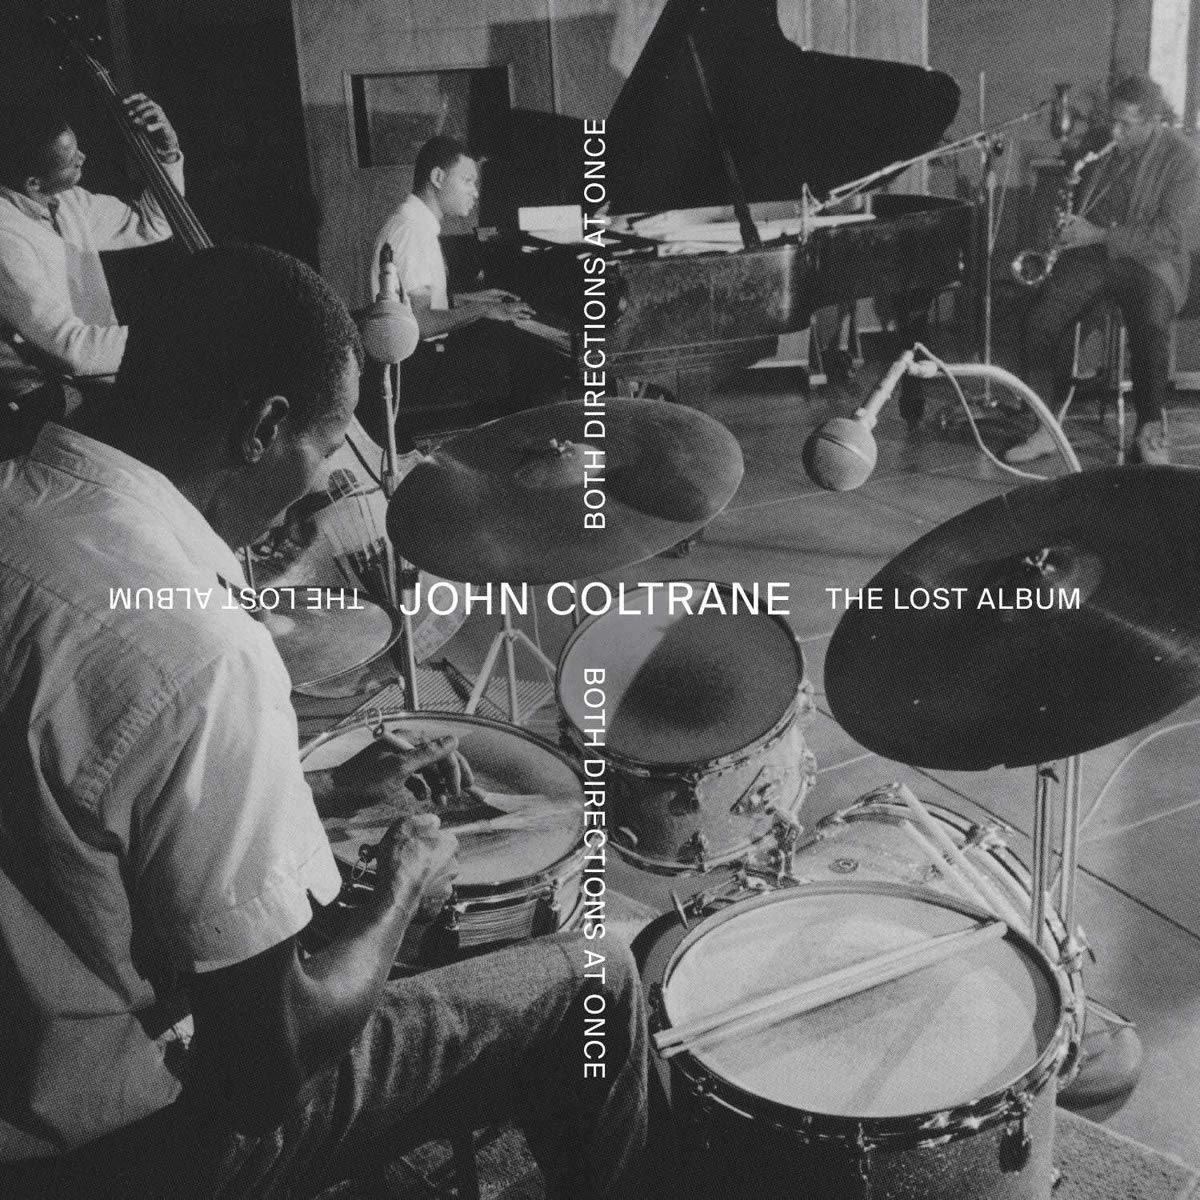 JOHN COLTRANE - BOTH DIRECTIONS AT ONCE Vinyl LP